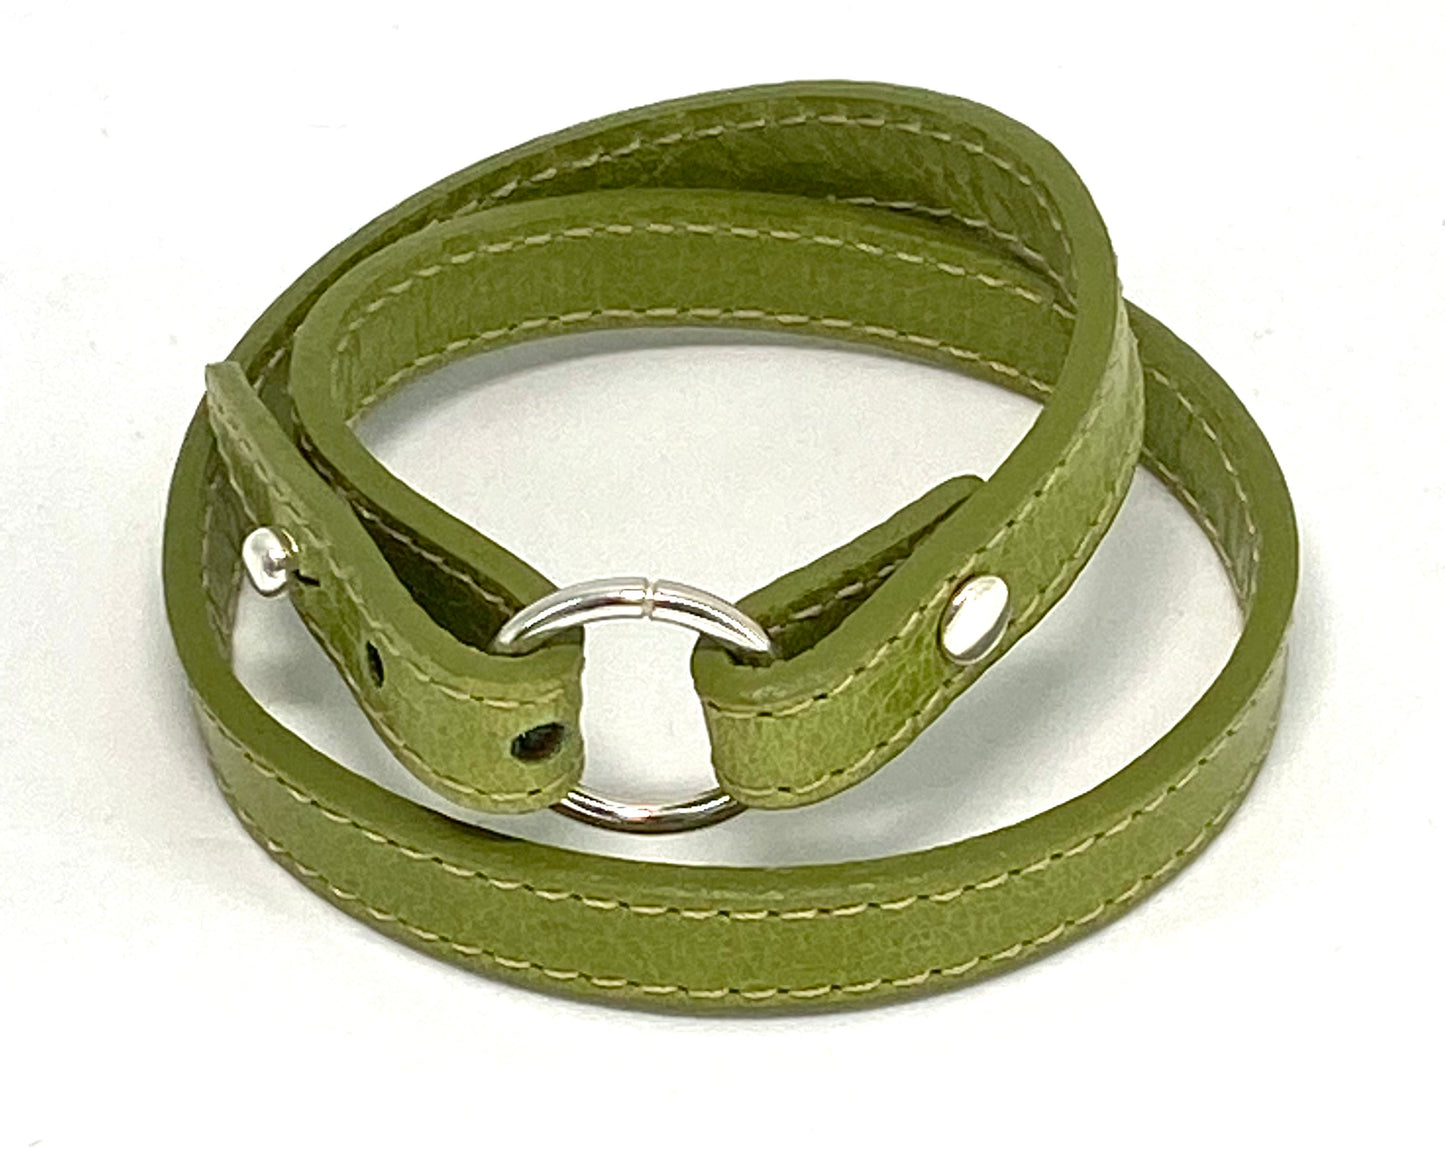 Circle Wrap Leather Bracelet